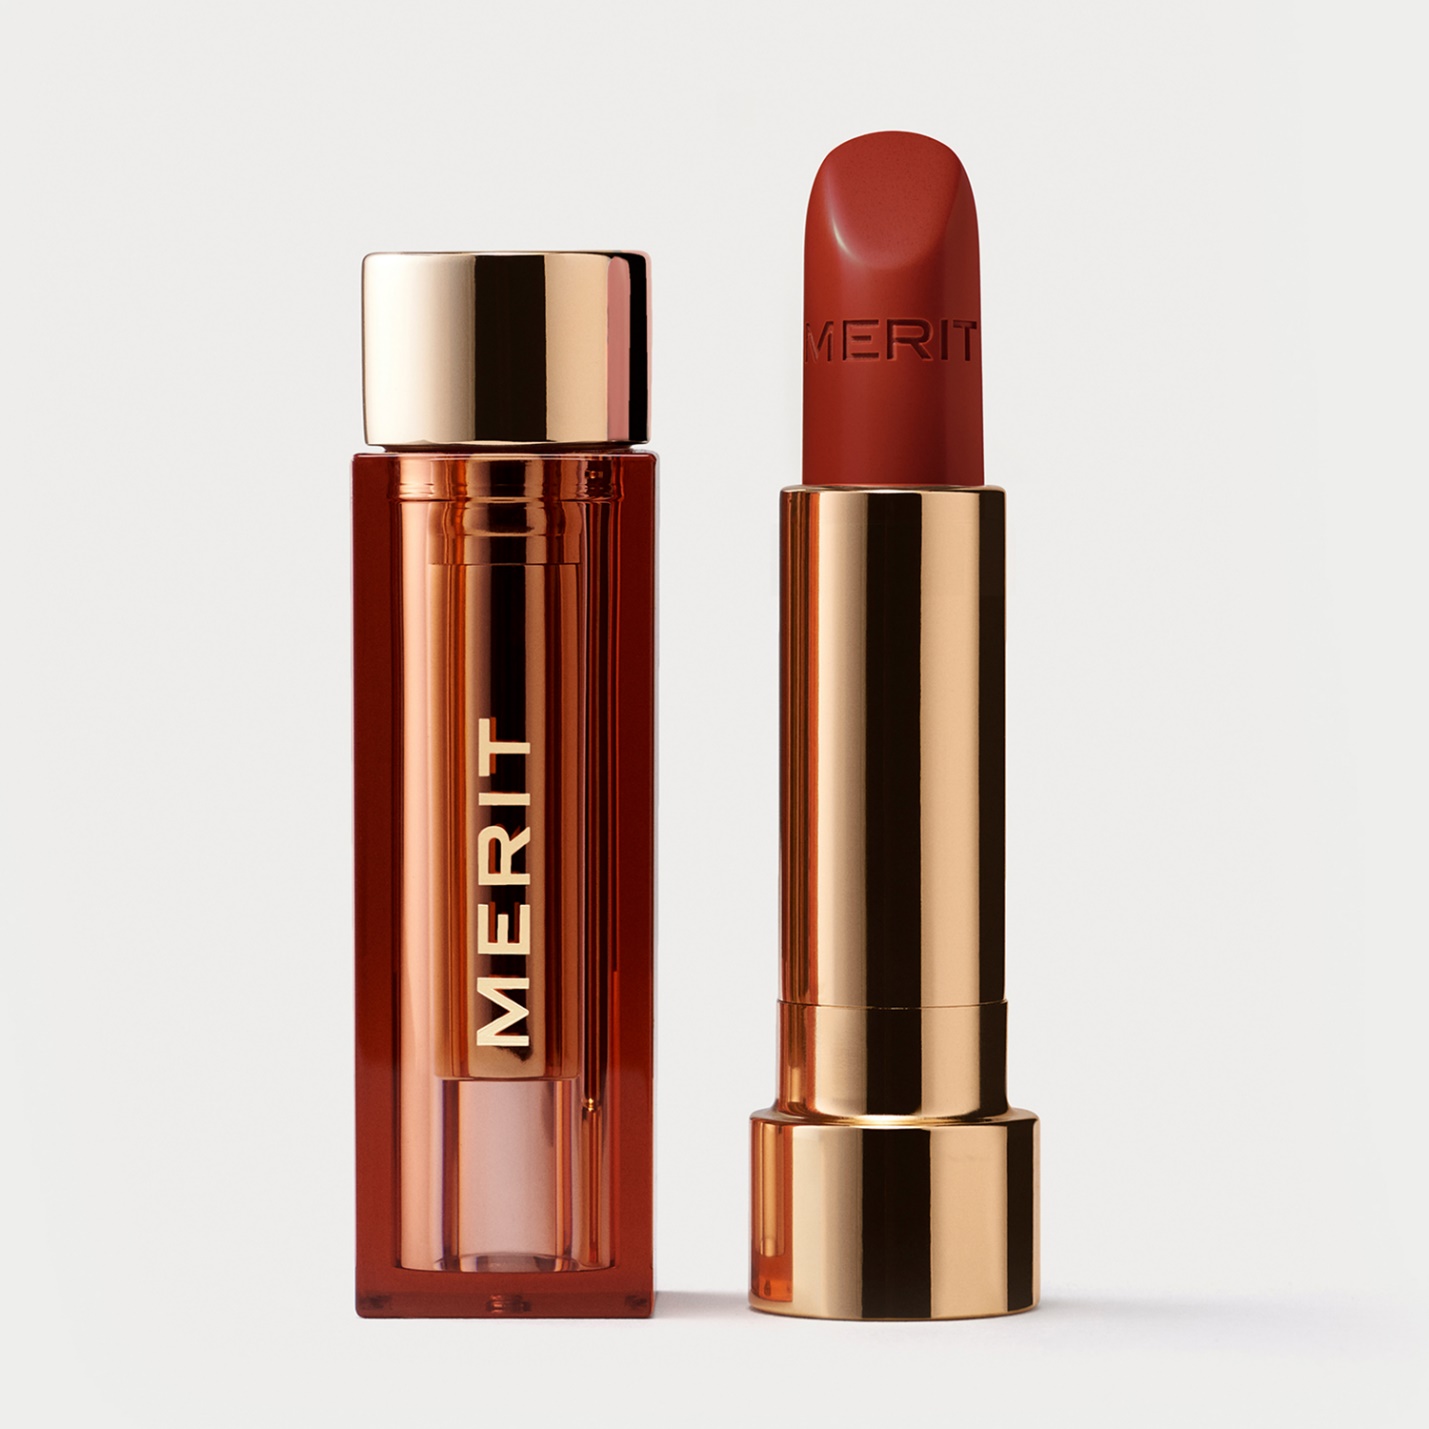 Merit Beauty Signature Lip Lipstick Review | Real Simple